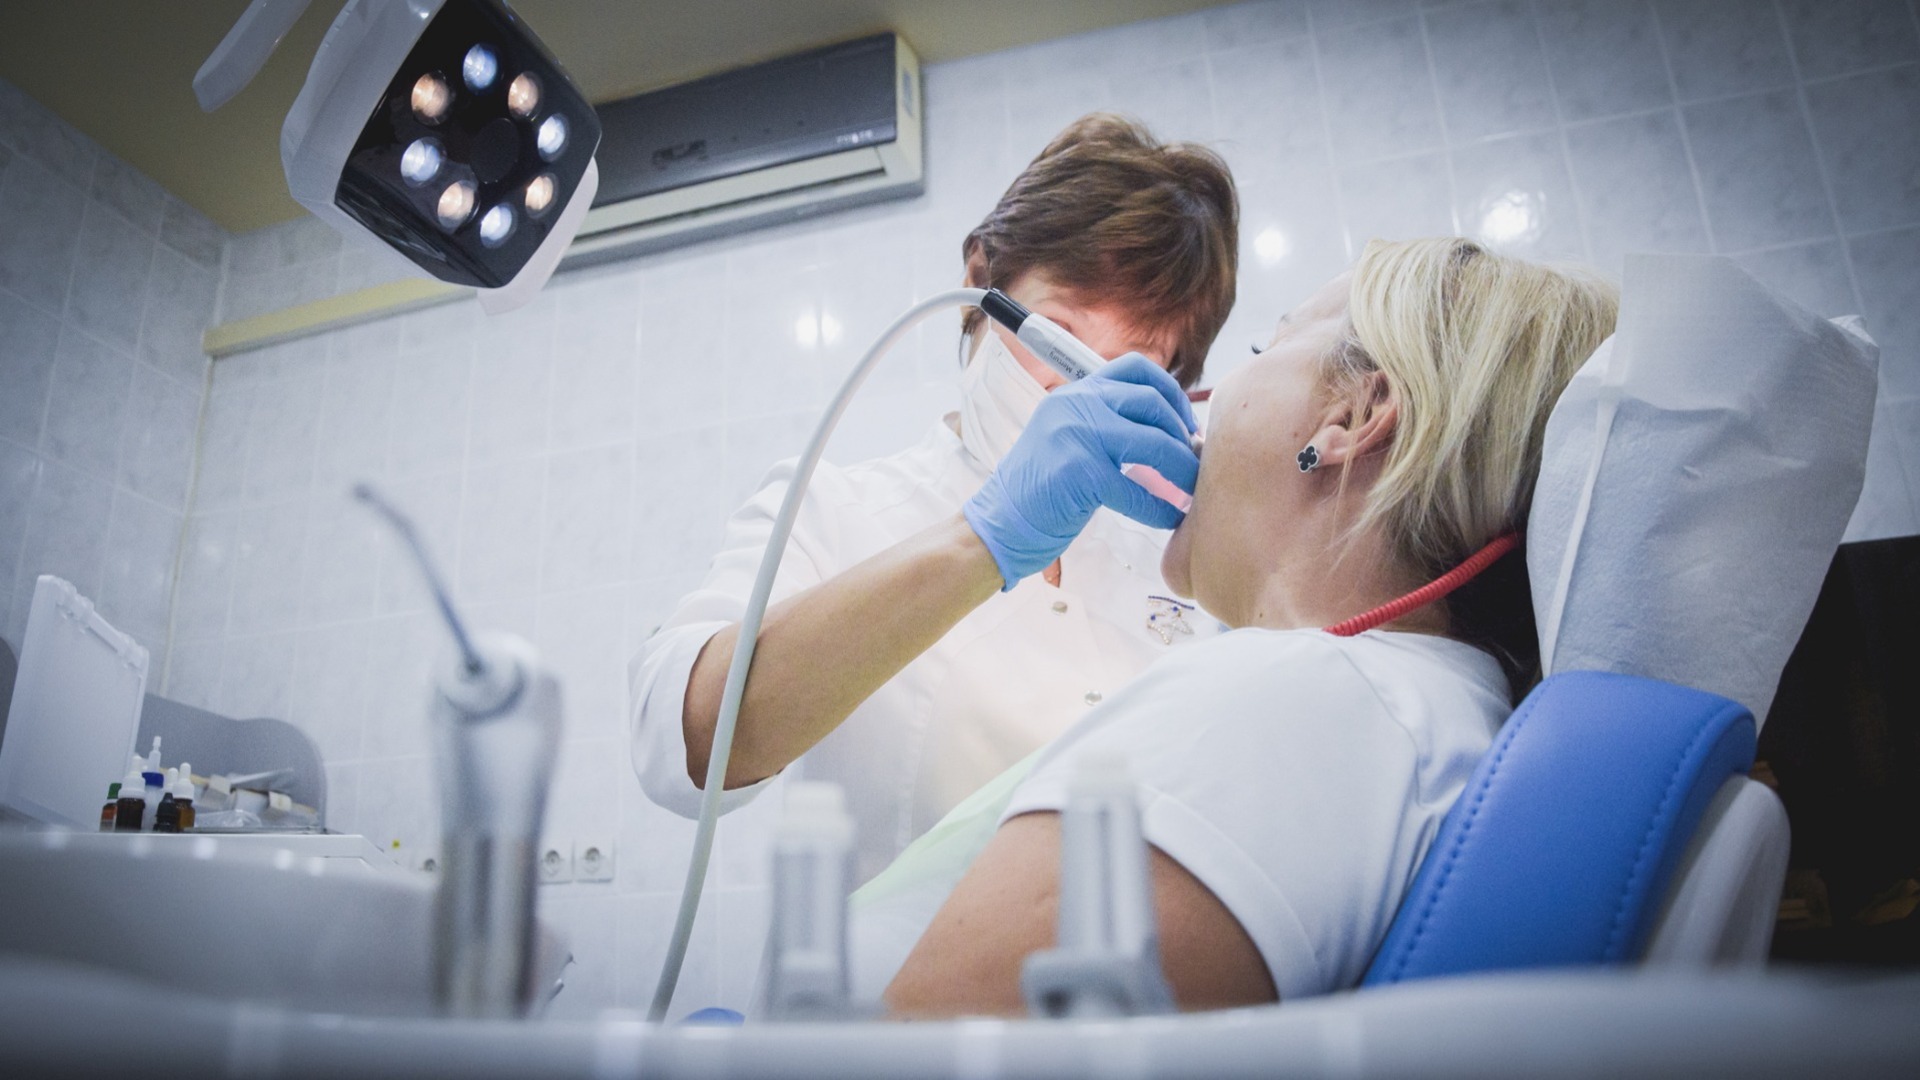 Услуги стоматологов за год подорожали в 3,5 раза